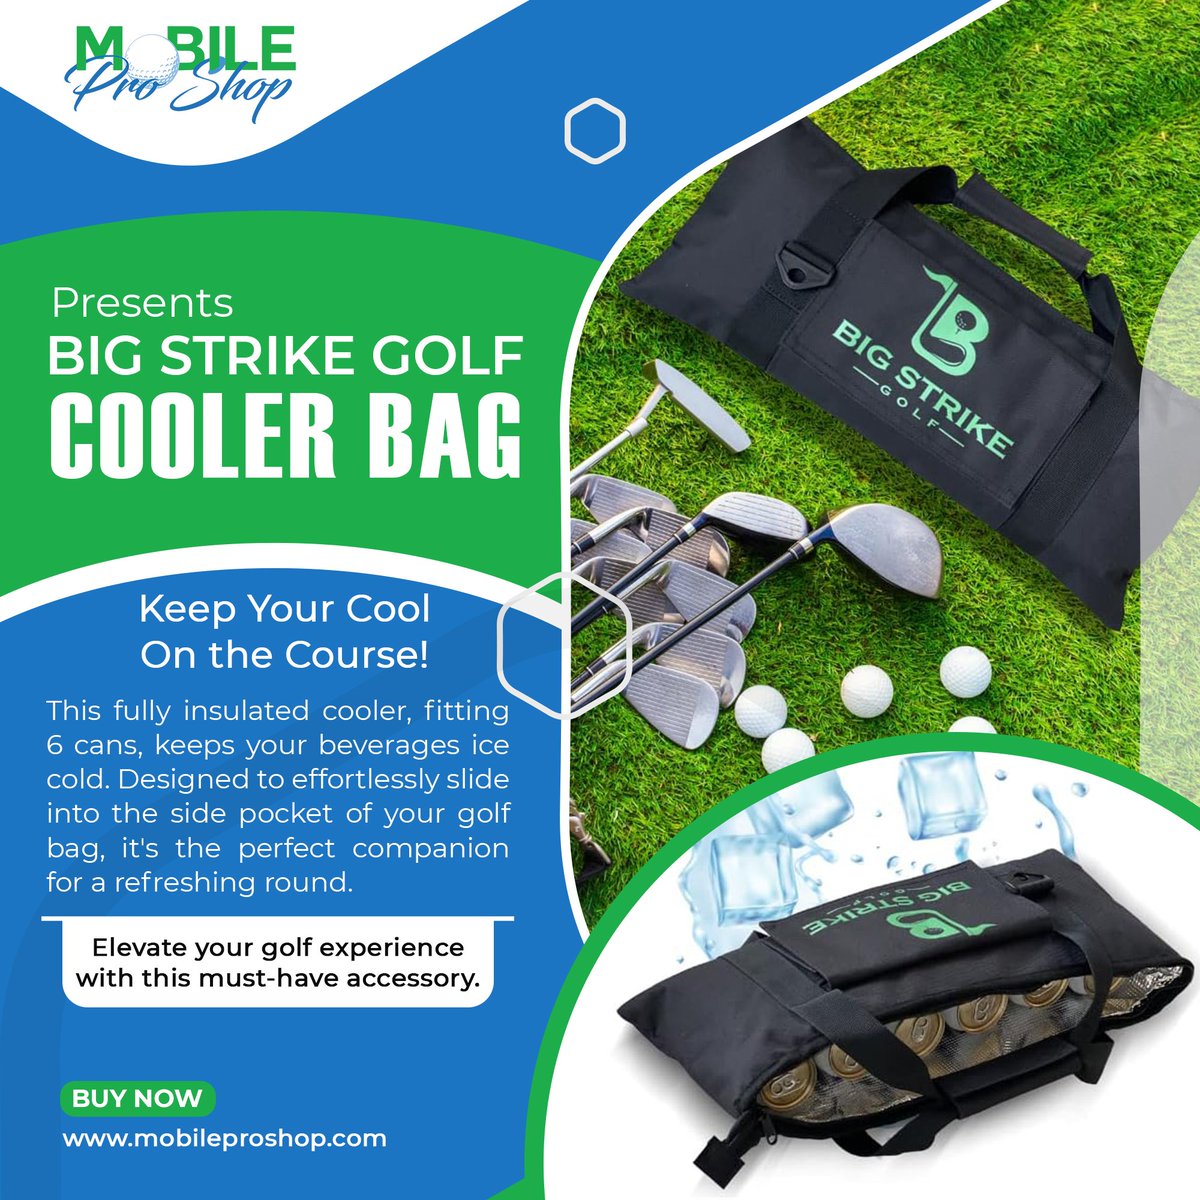 Mobile Pro Shop Presents Big Strike Golf Cooler Bag - Keep Your Cool On the Course!
#MobileProShop #BigStrikeGolf #MobileProShop #GolfCoolerBag #GolfAccessories #StayCoolOnTheCourse #GolfEssentials #ColdDrinksOnTheGo #GolfGear #ProShopFinds #GameChanger